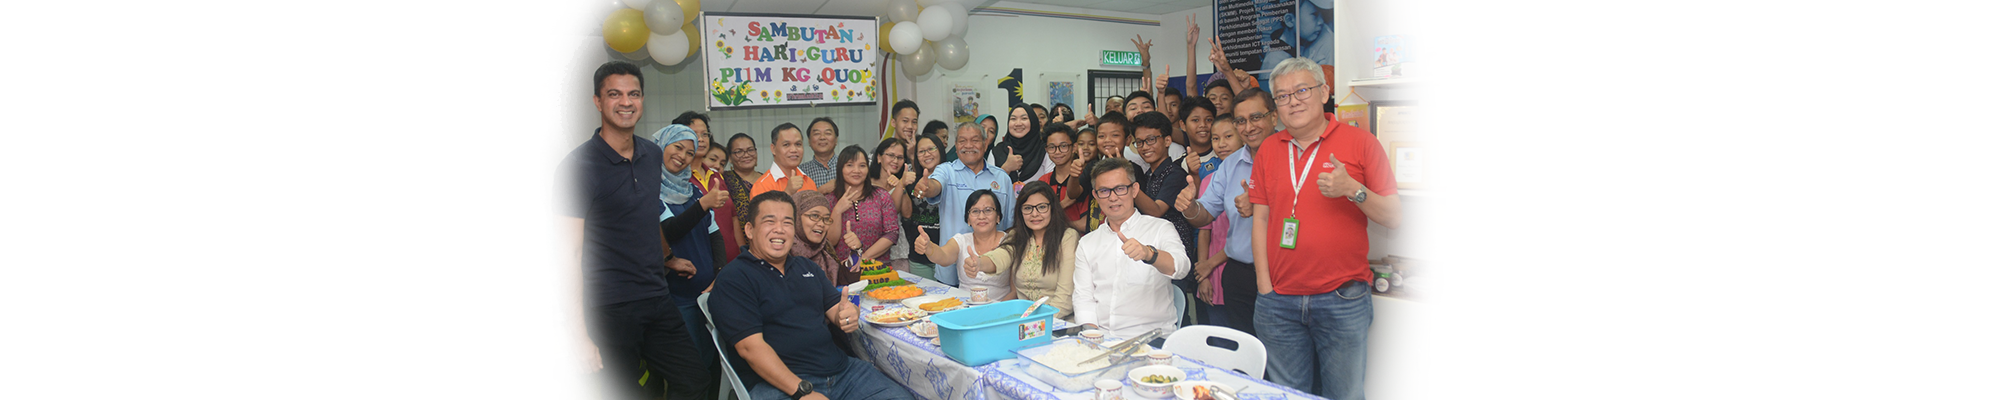 Teachers Day Sarawak